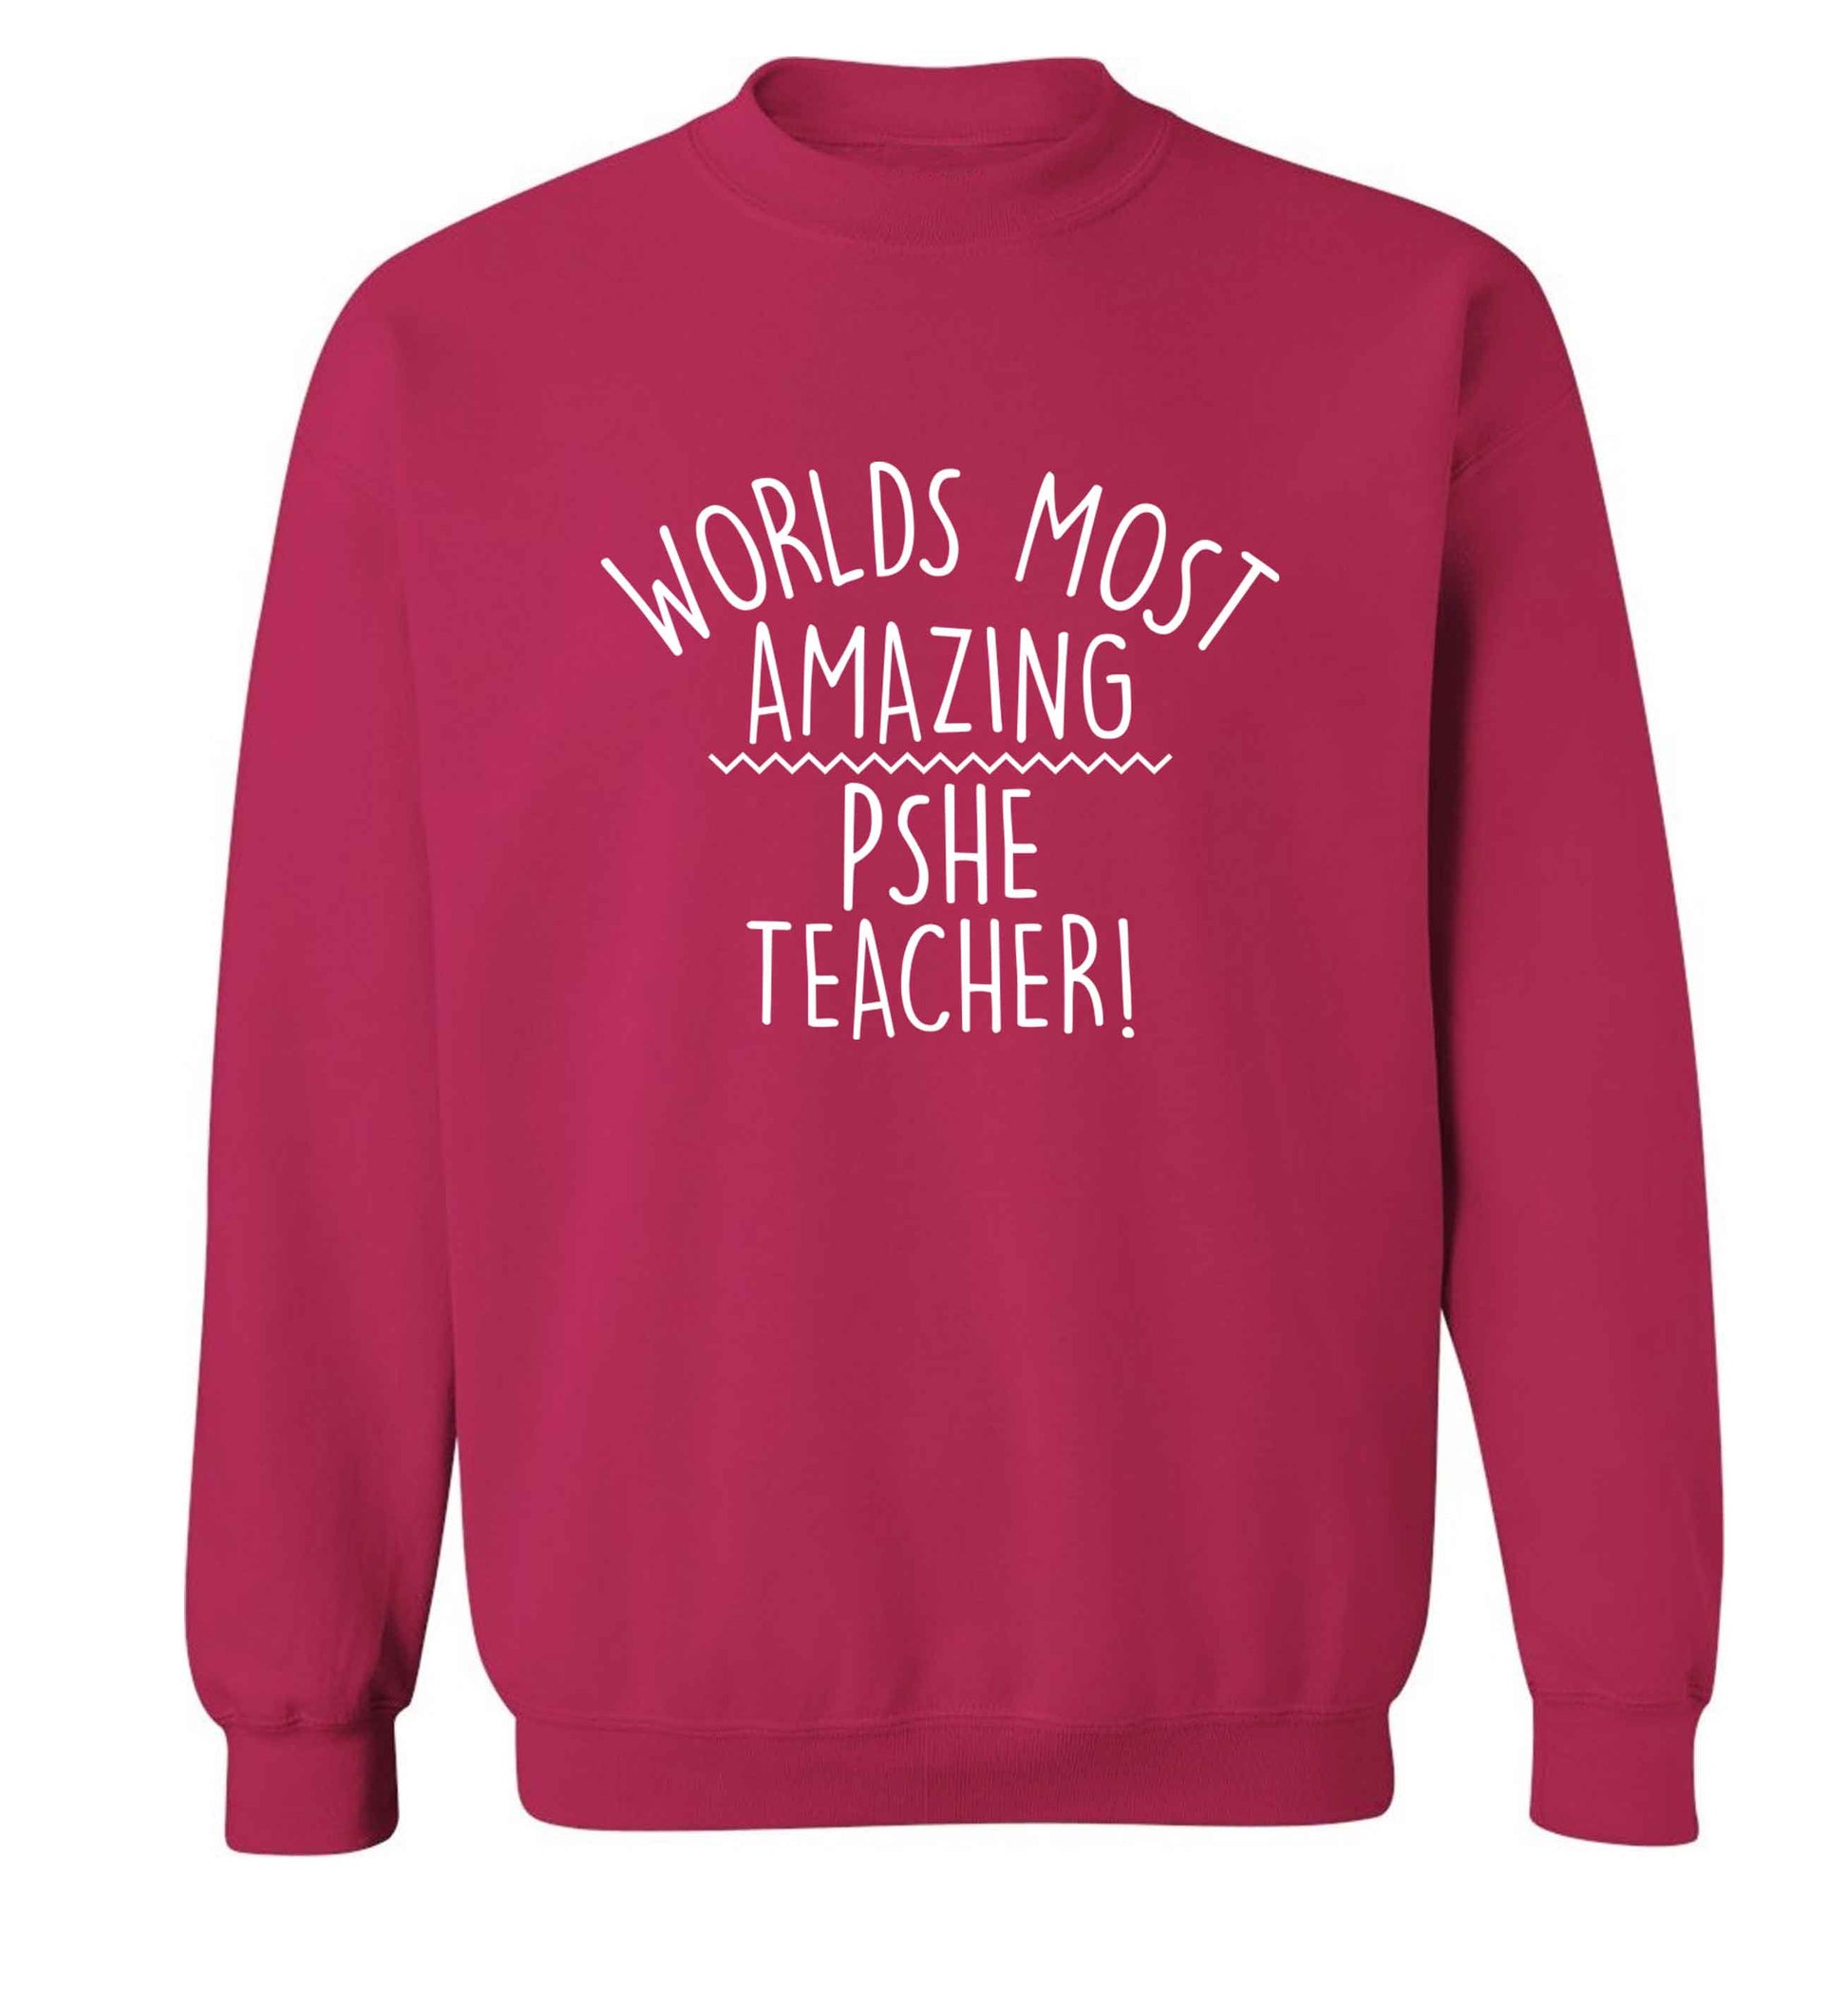 Worlds most amazing PHSE teacher adult's unisex pink sweater 2XL